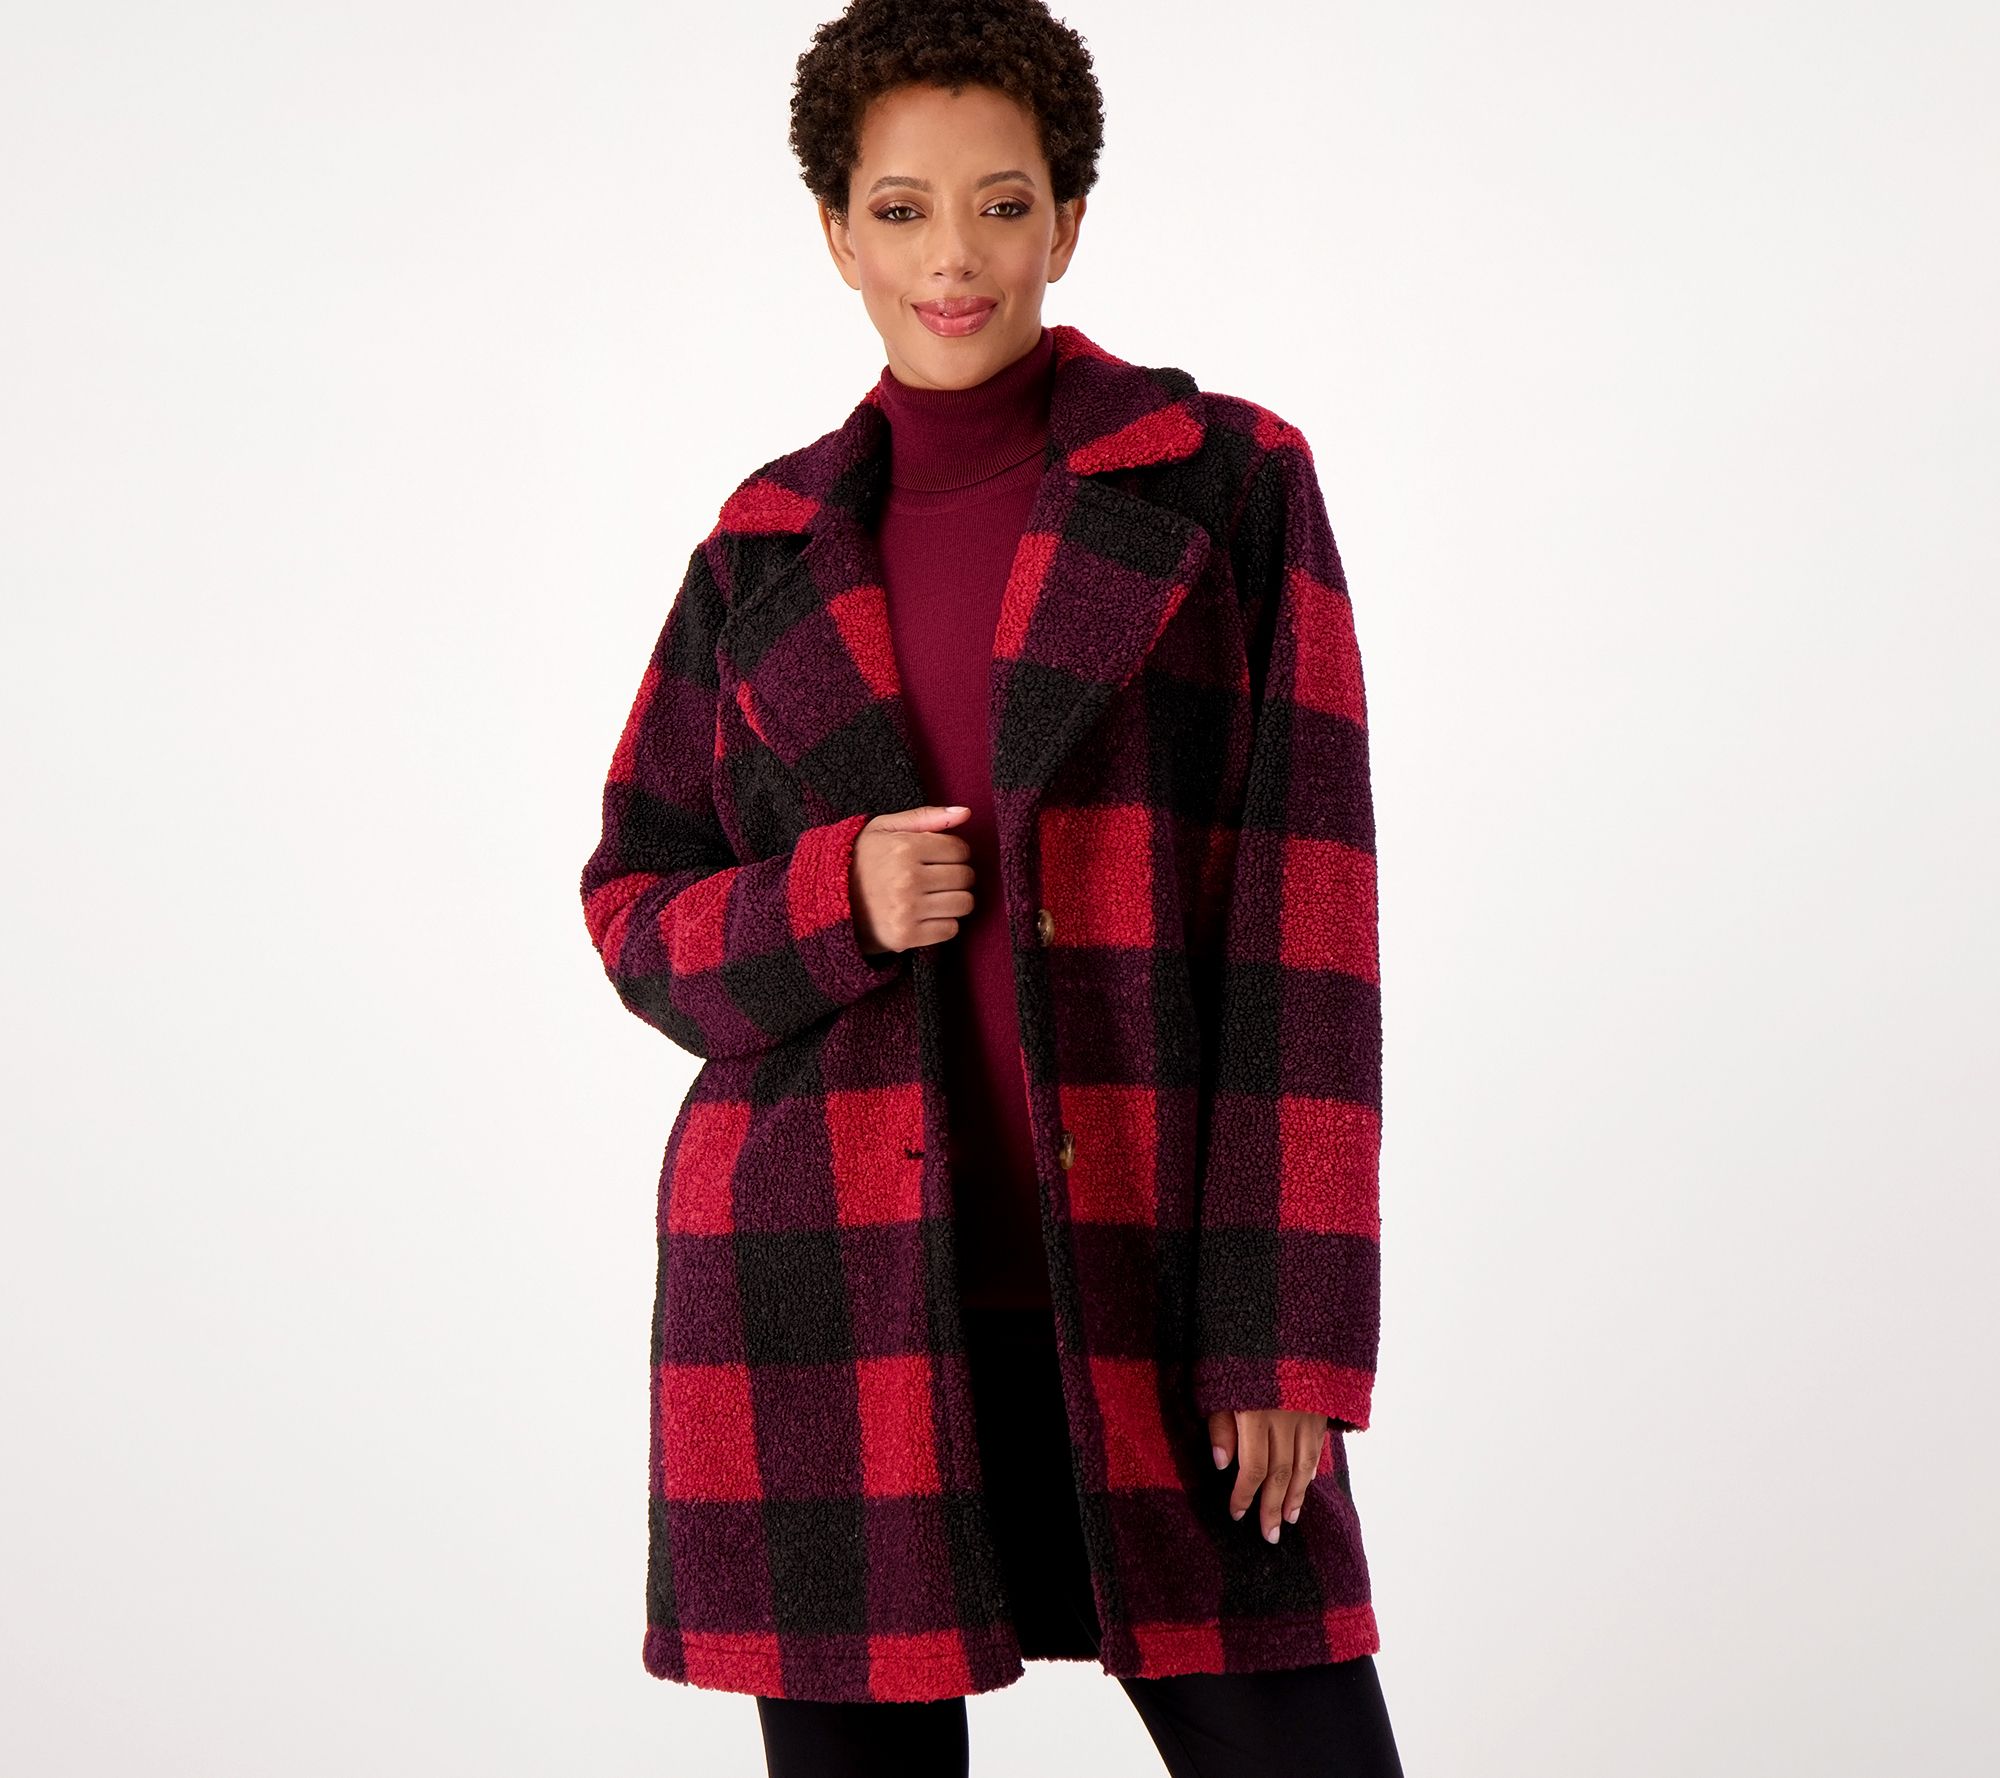 J.o.a. Teddy Coat  London outfit, Fall fashion coats, Winter fashion